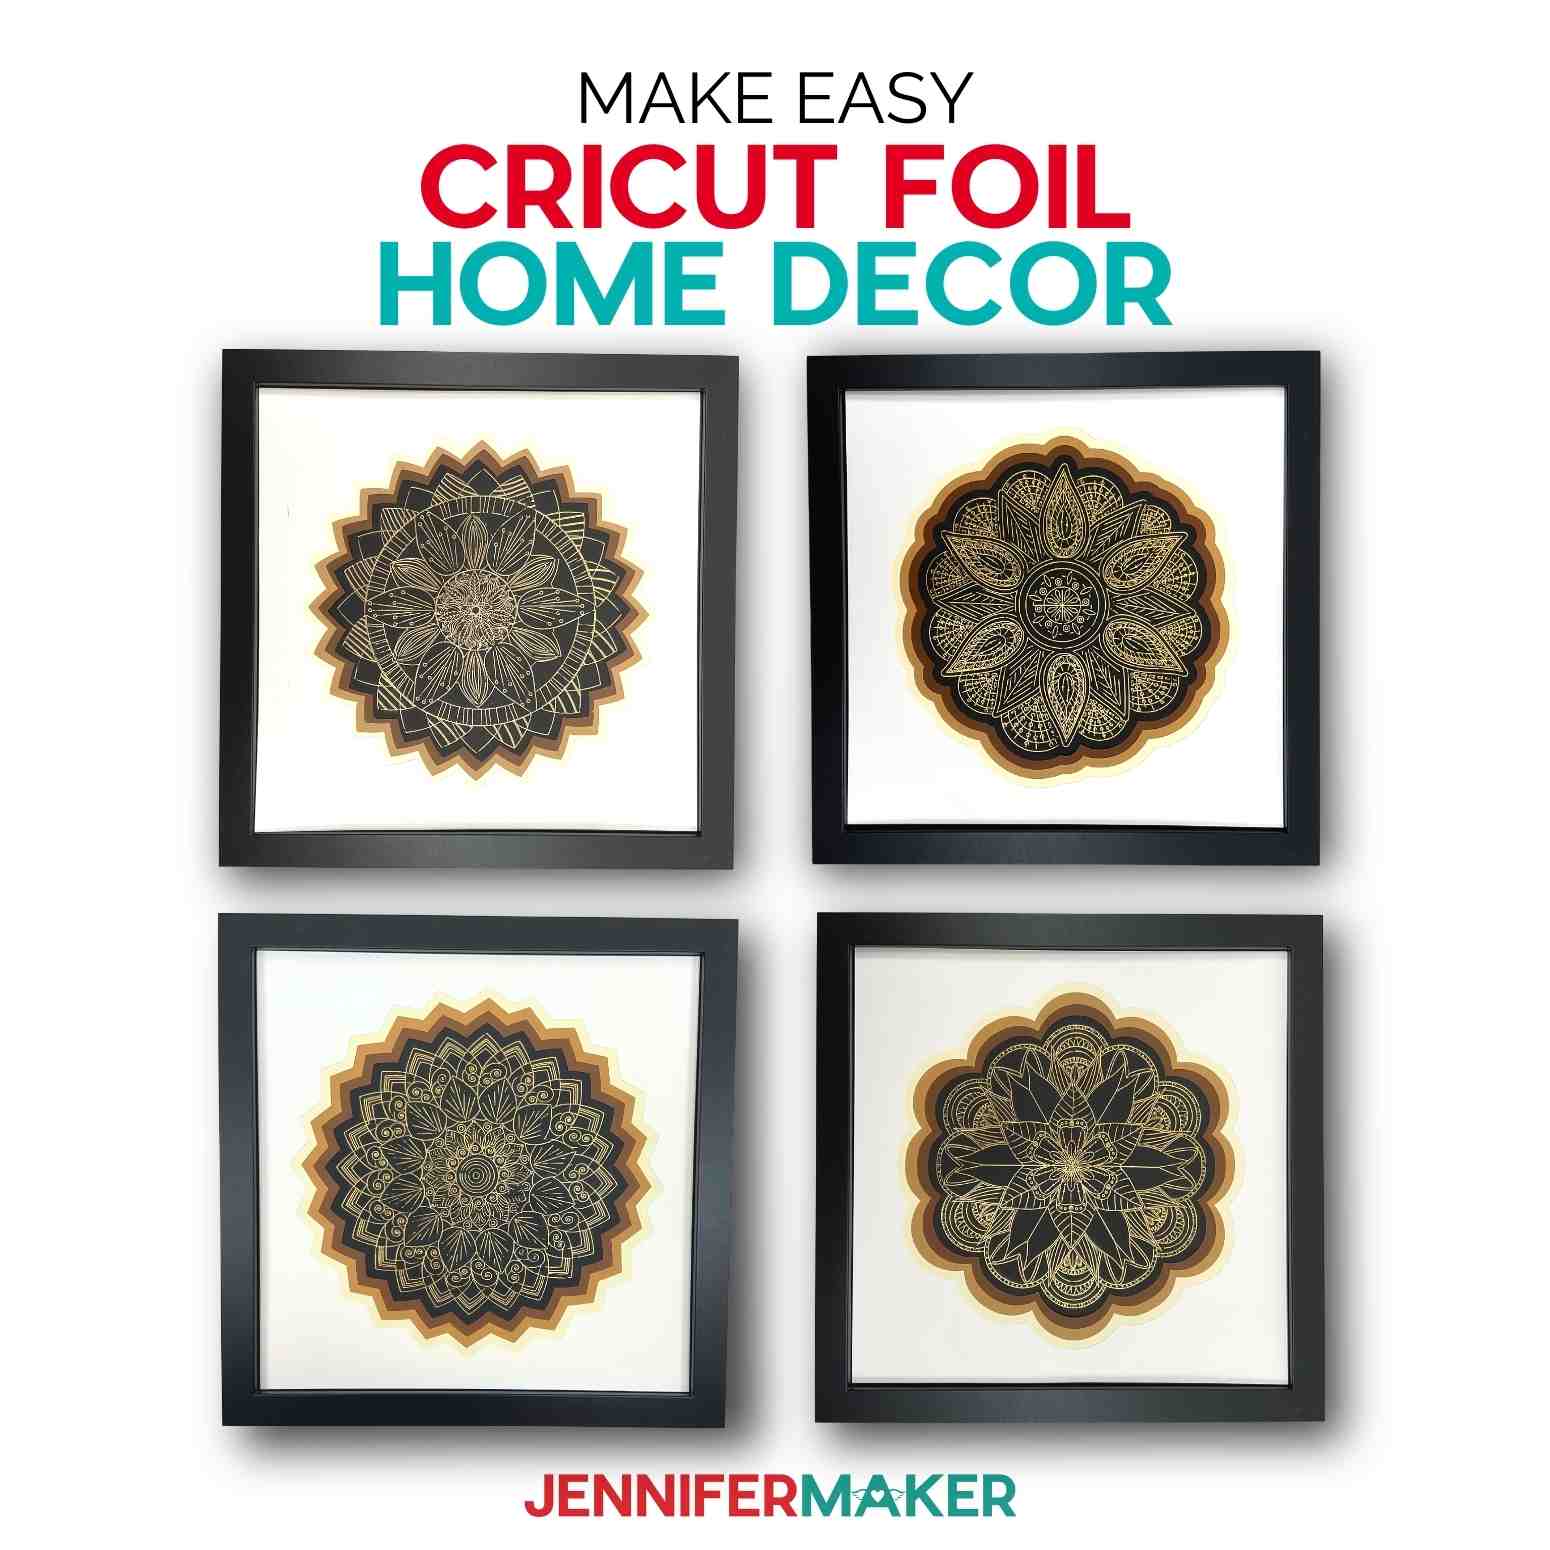 Cricut Foil Home Decor: Elegant Foiled Mandala Art